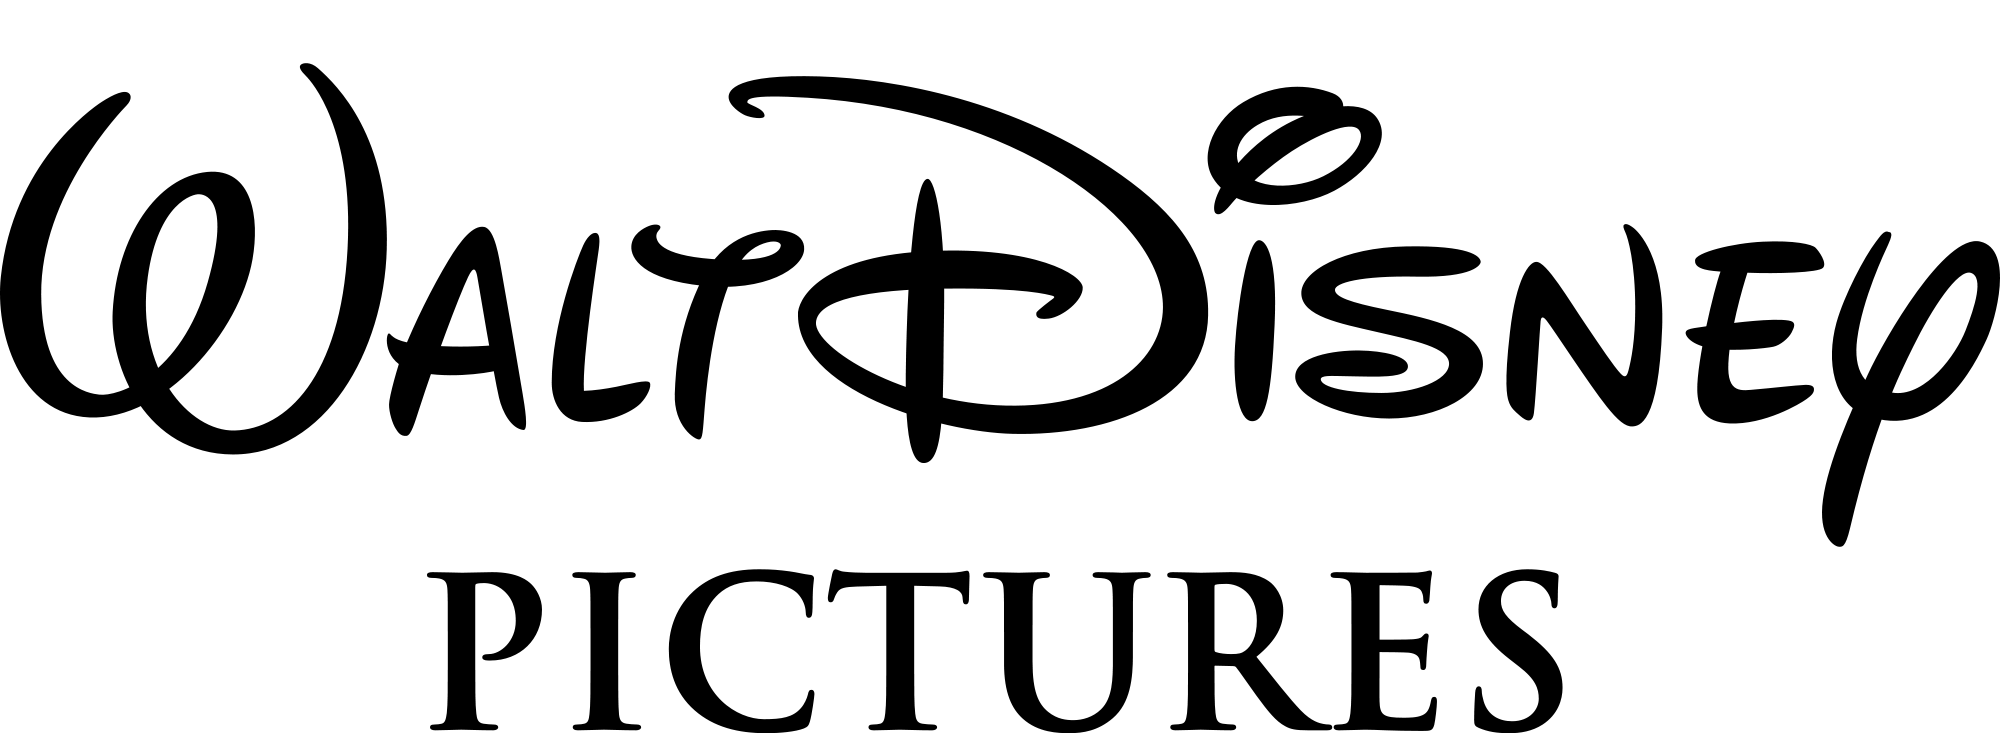 Old Walt Disney Logo - Walt Disney logo PNG images free download